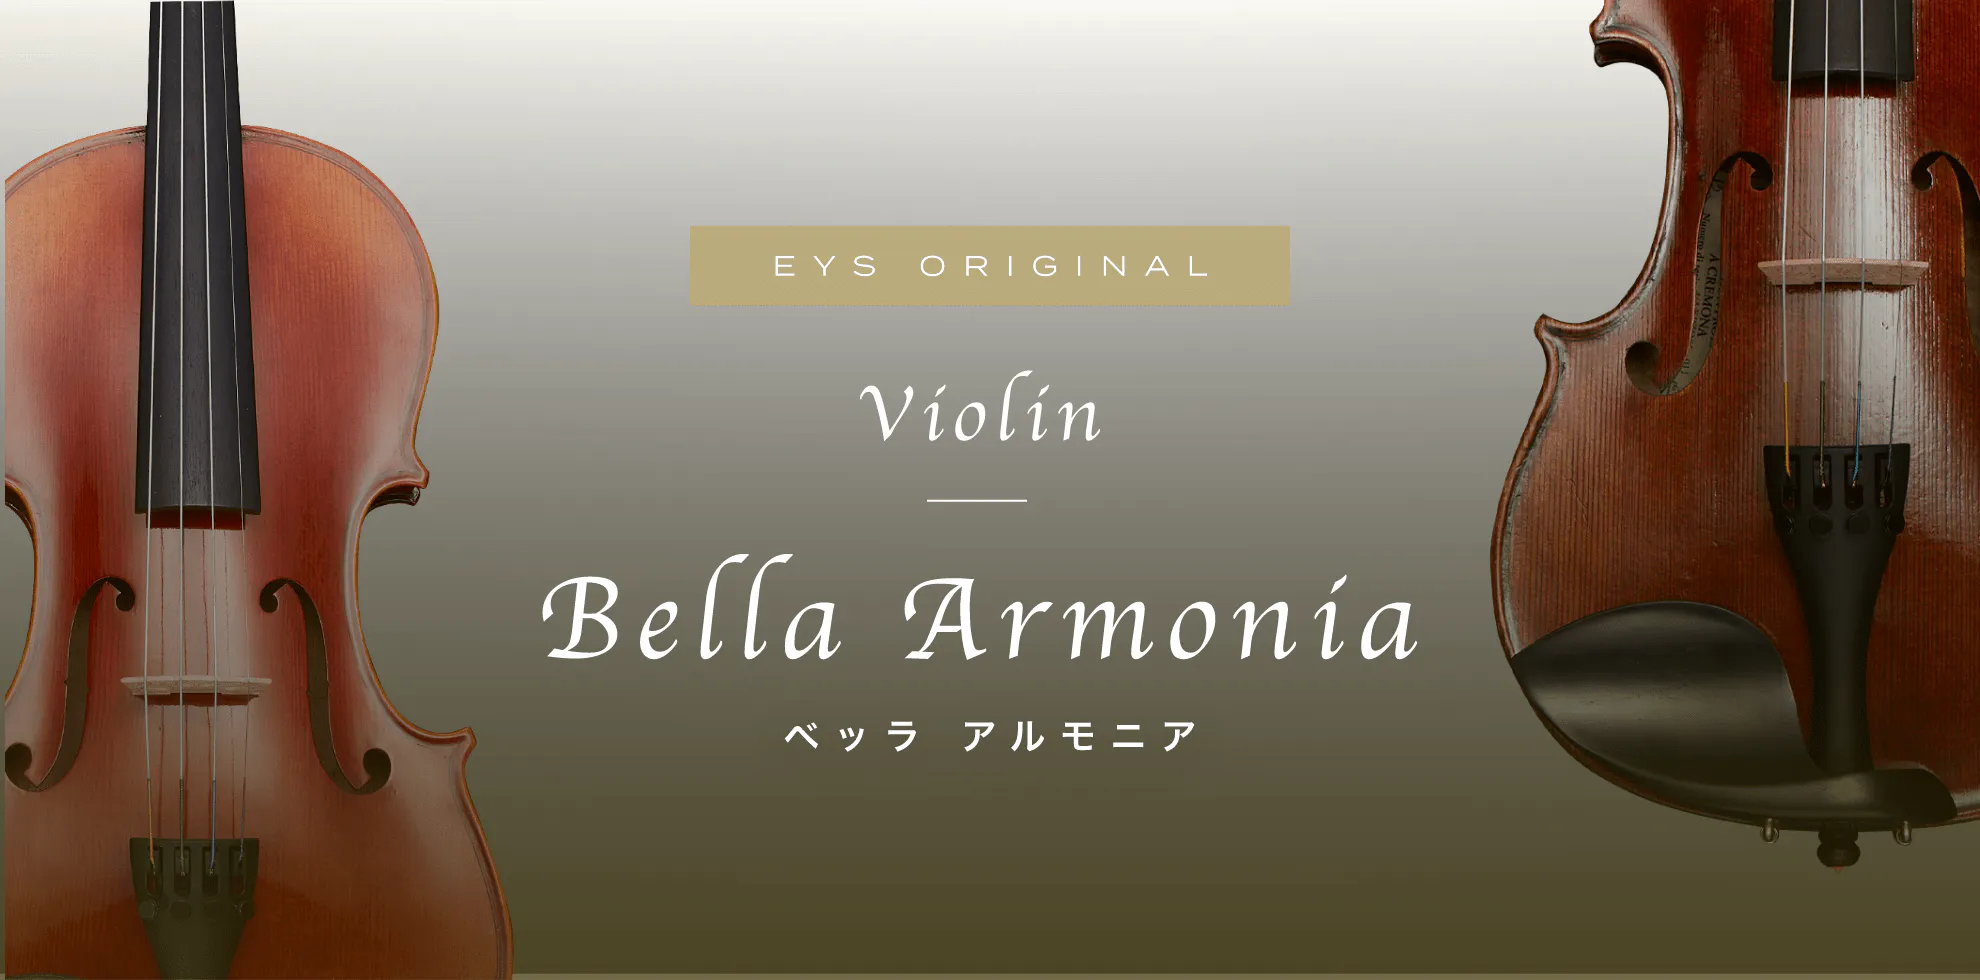 EYS ORIGINAL Violin Bella Armonia ベッラ アルモニア